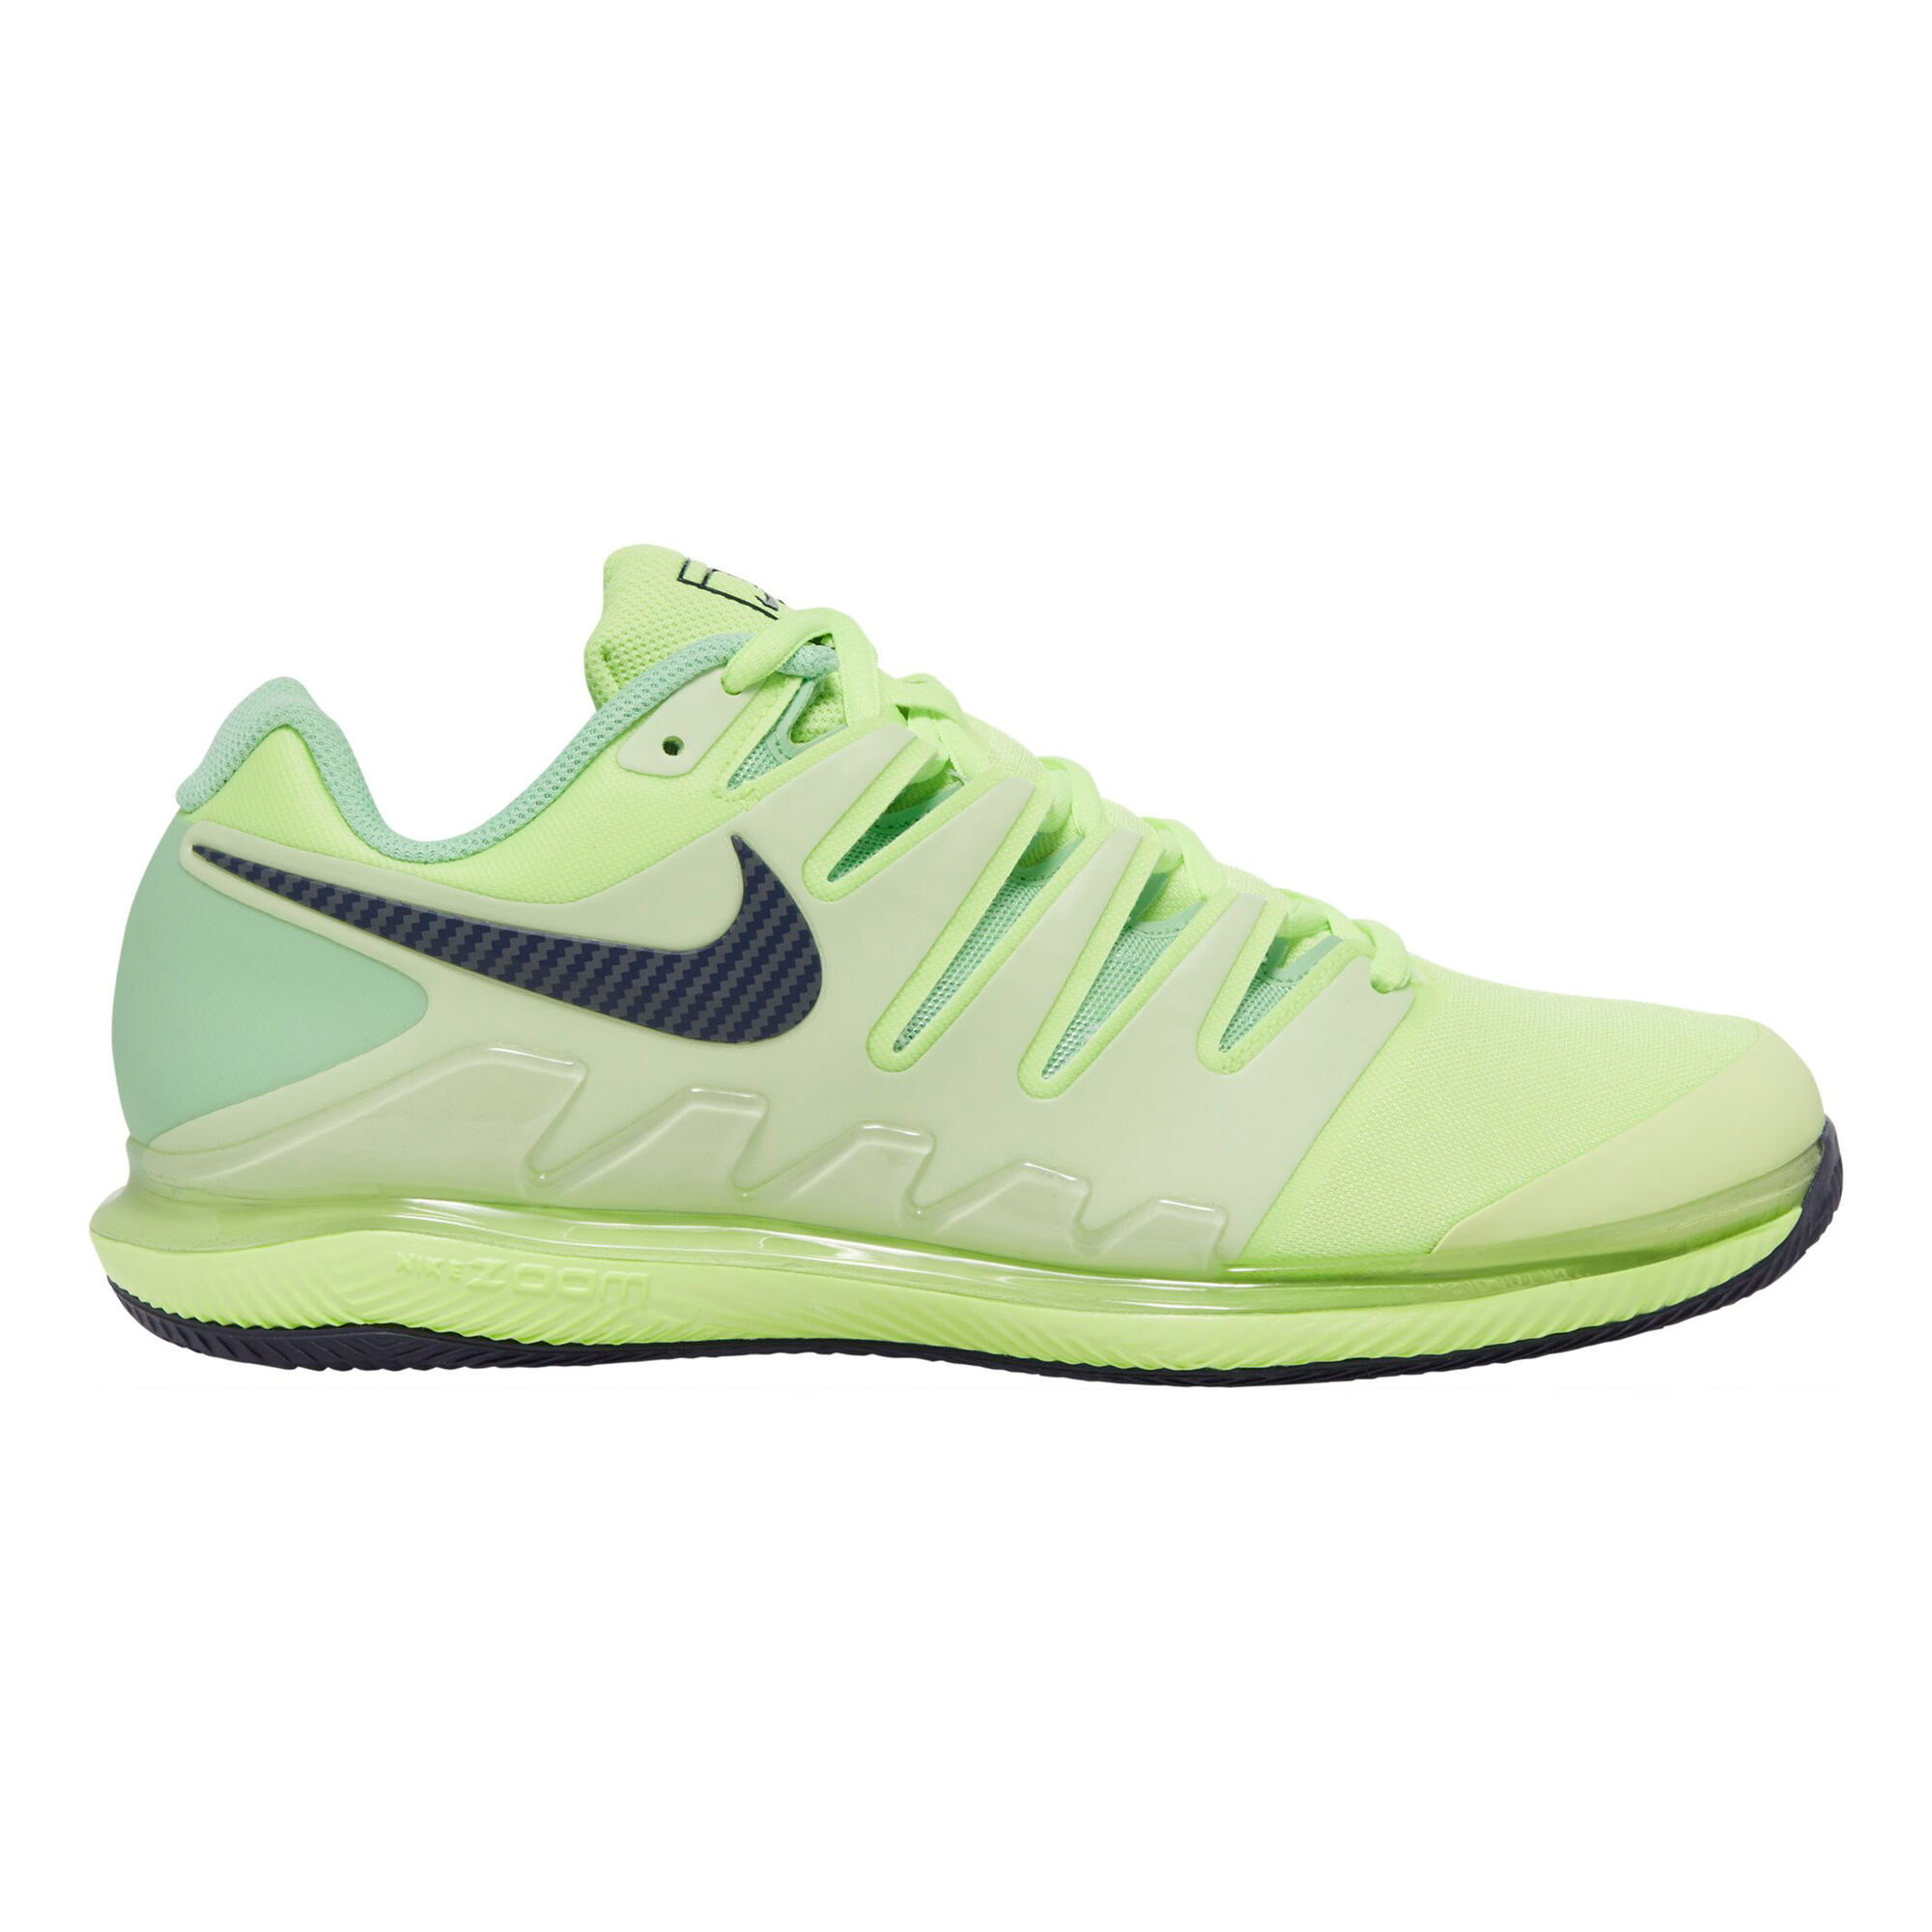 buy Nike Air Zoom Vapor X Clay Court Shoe Men - Light Green, Dark Blue